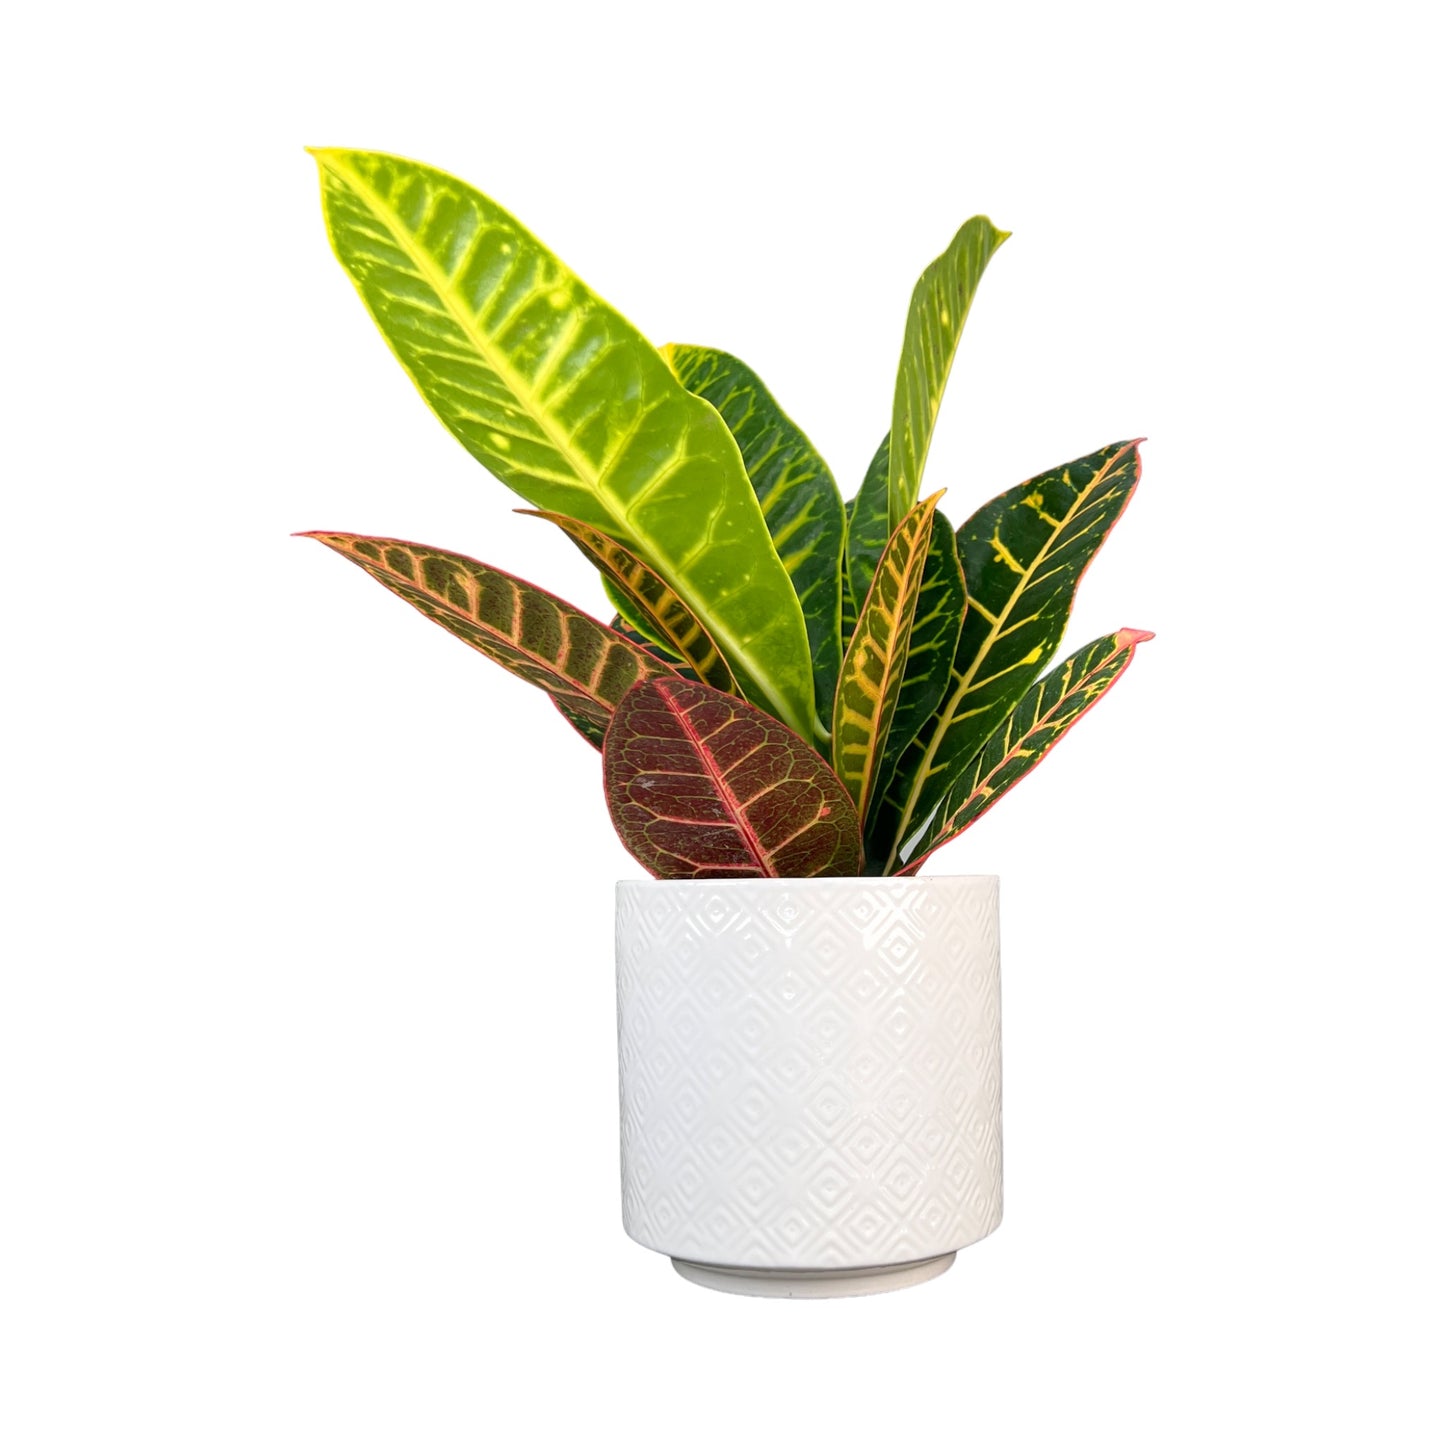 Codiaeum 12cm in white Ribbed Ceramic - Green Plant The Horti House